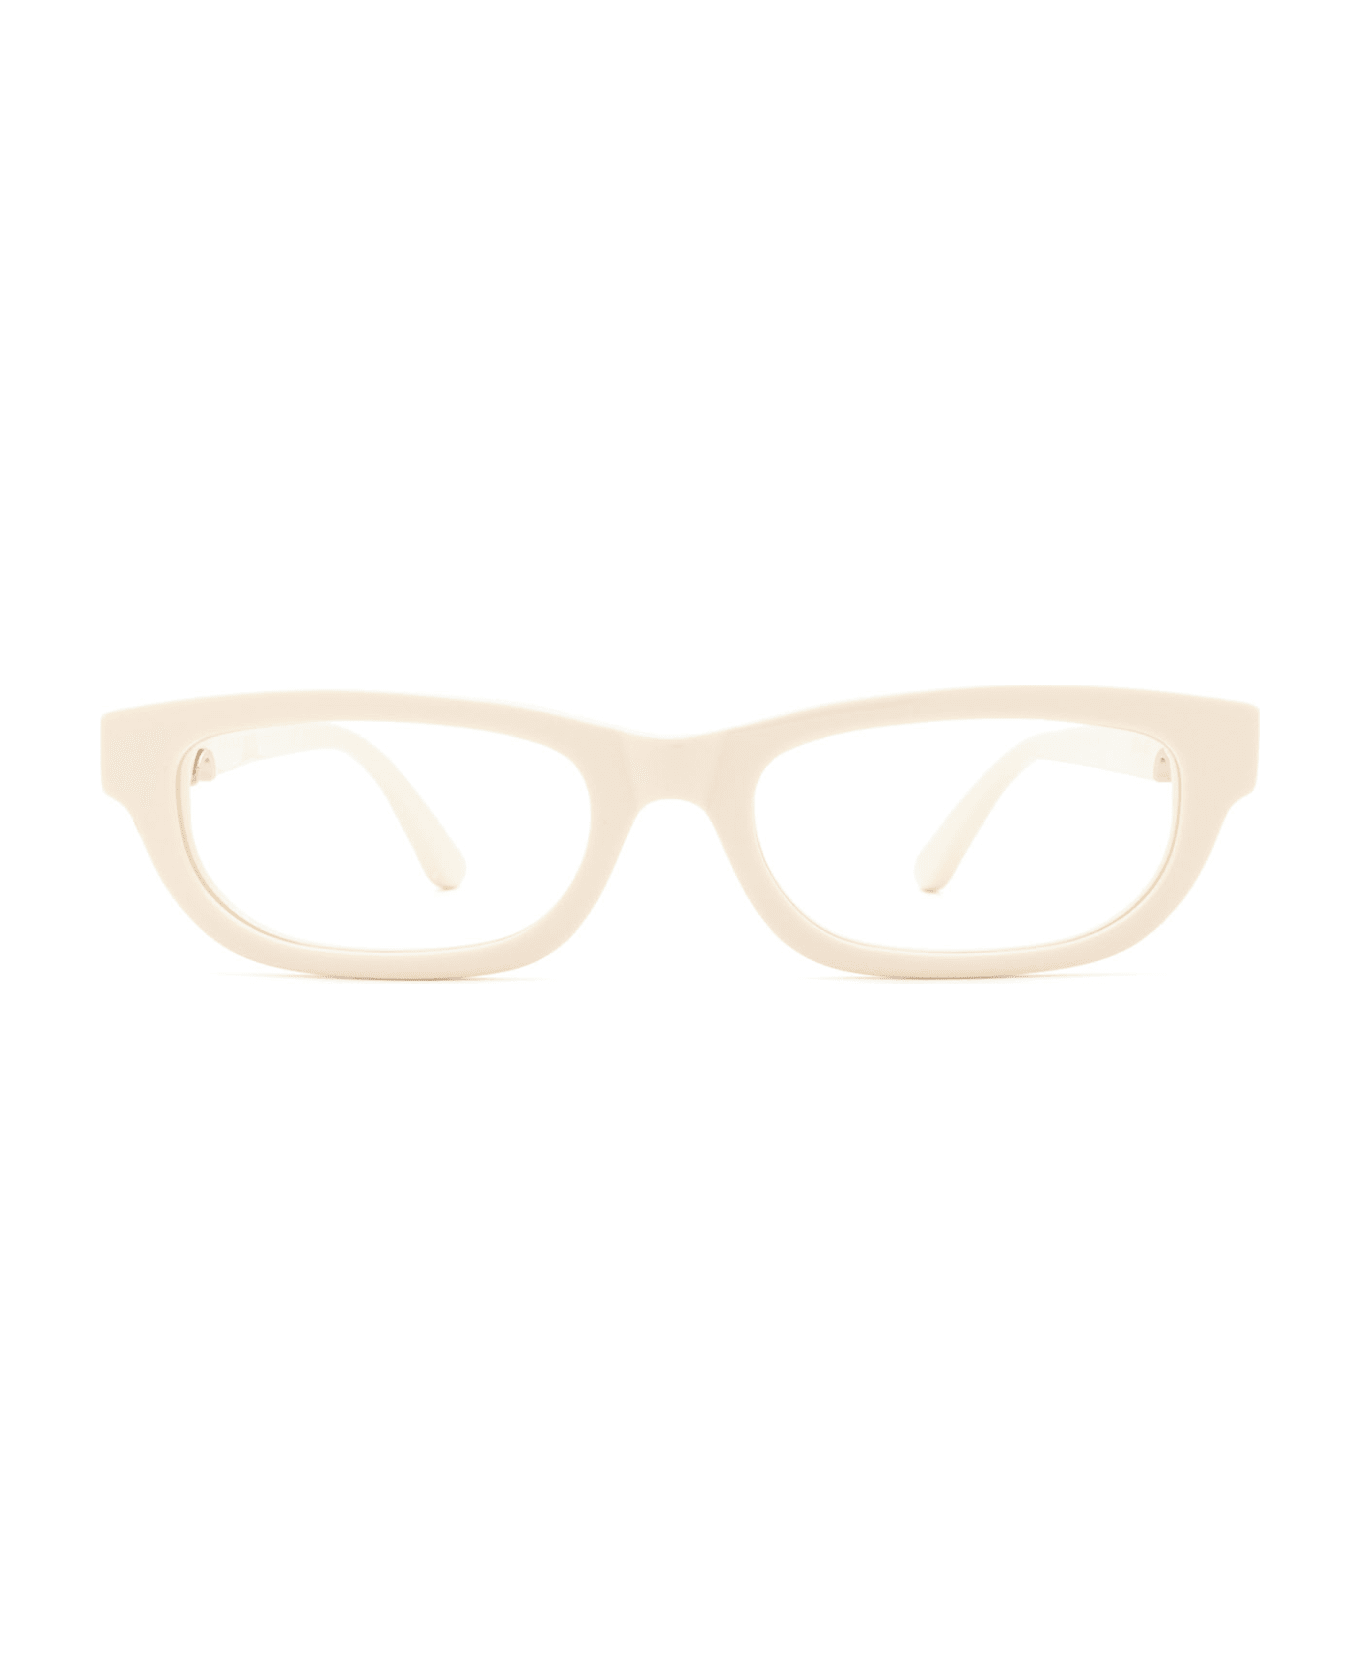 Huma Lou Ivory Glasses - Ivory